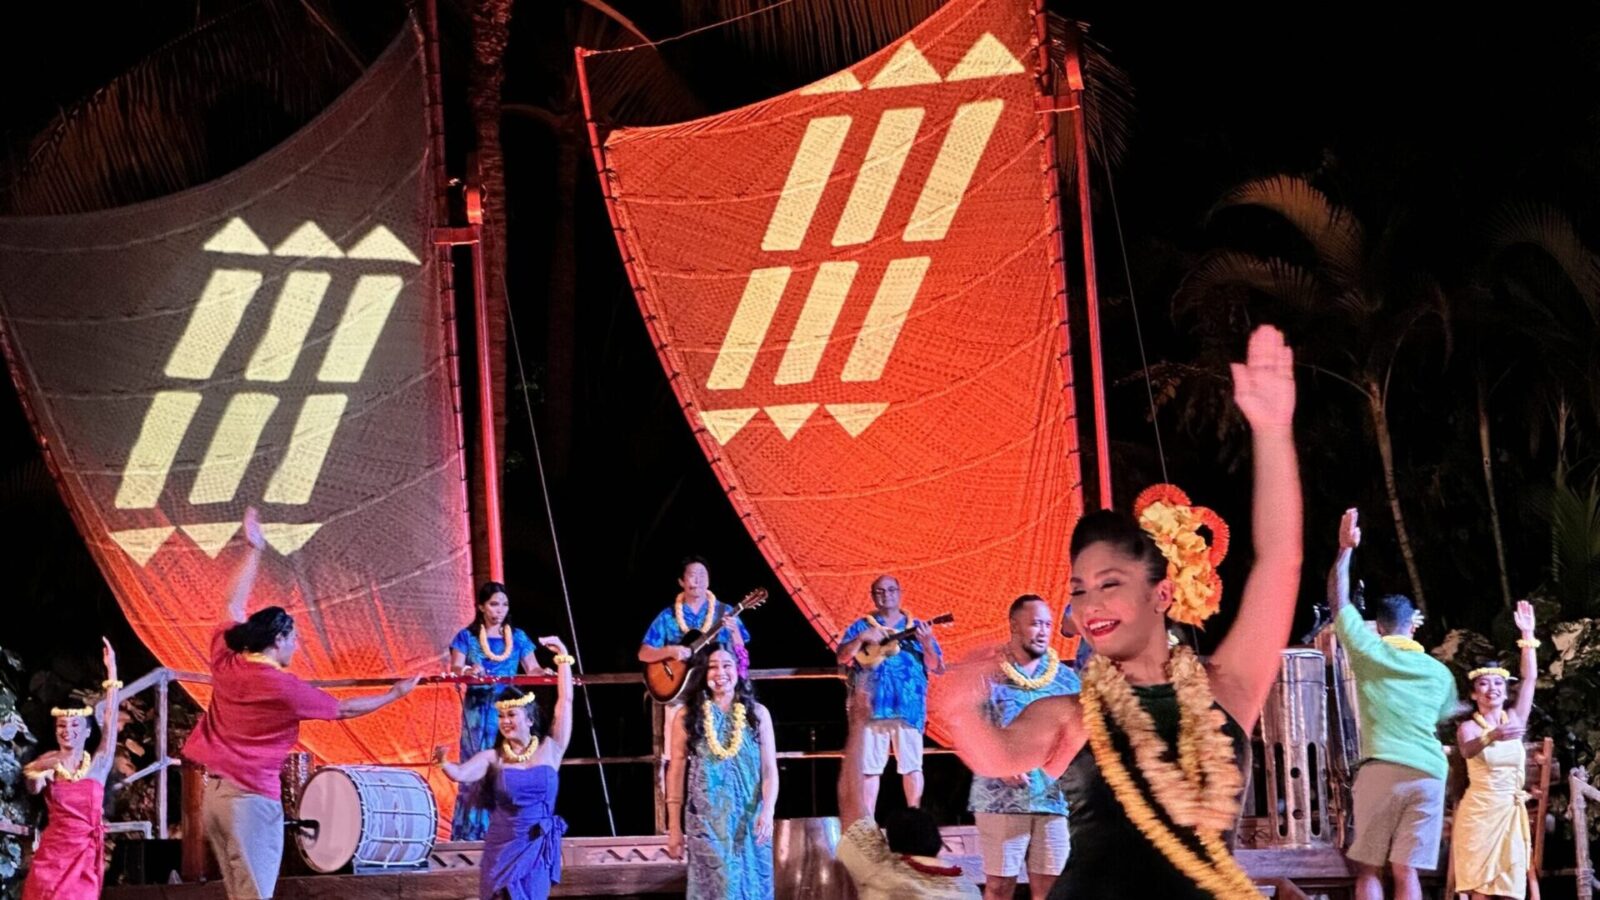 Disney Aulani luau Ka Wa'a dancers and storyteller against a nighttime background and sails